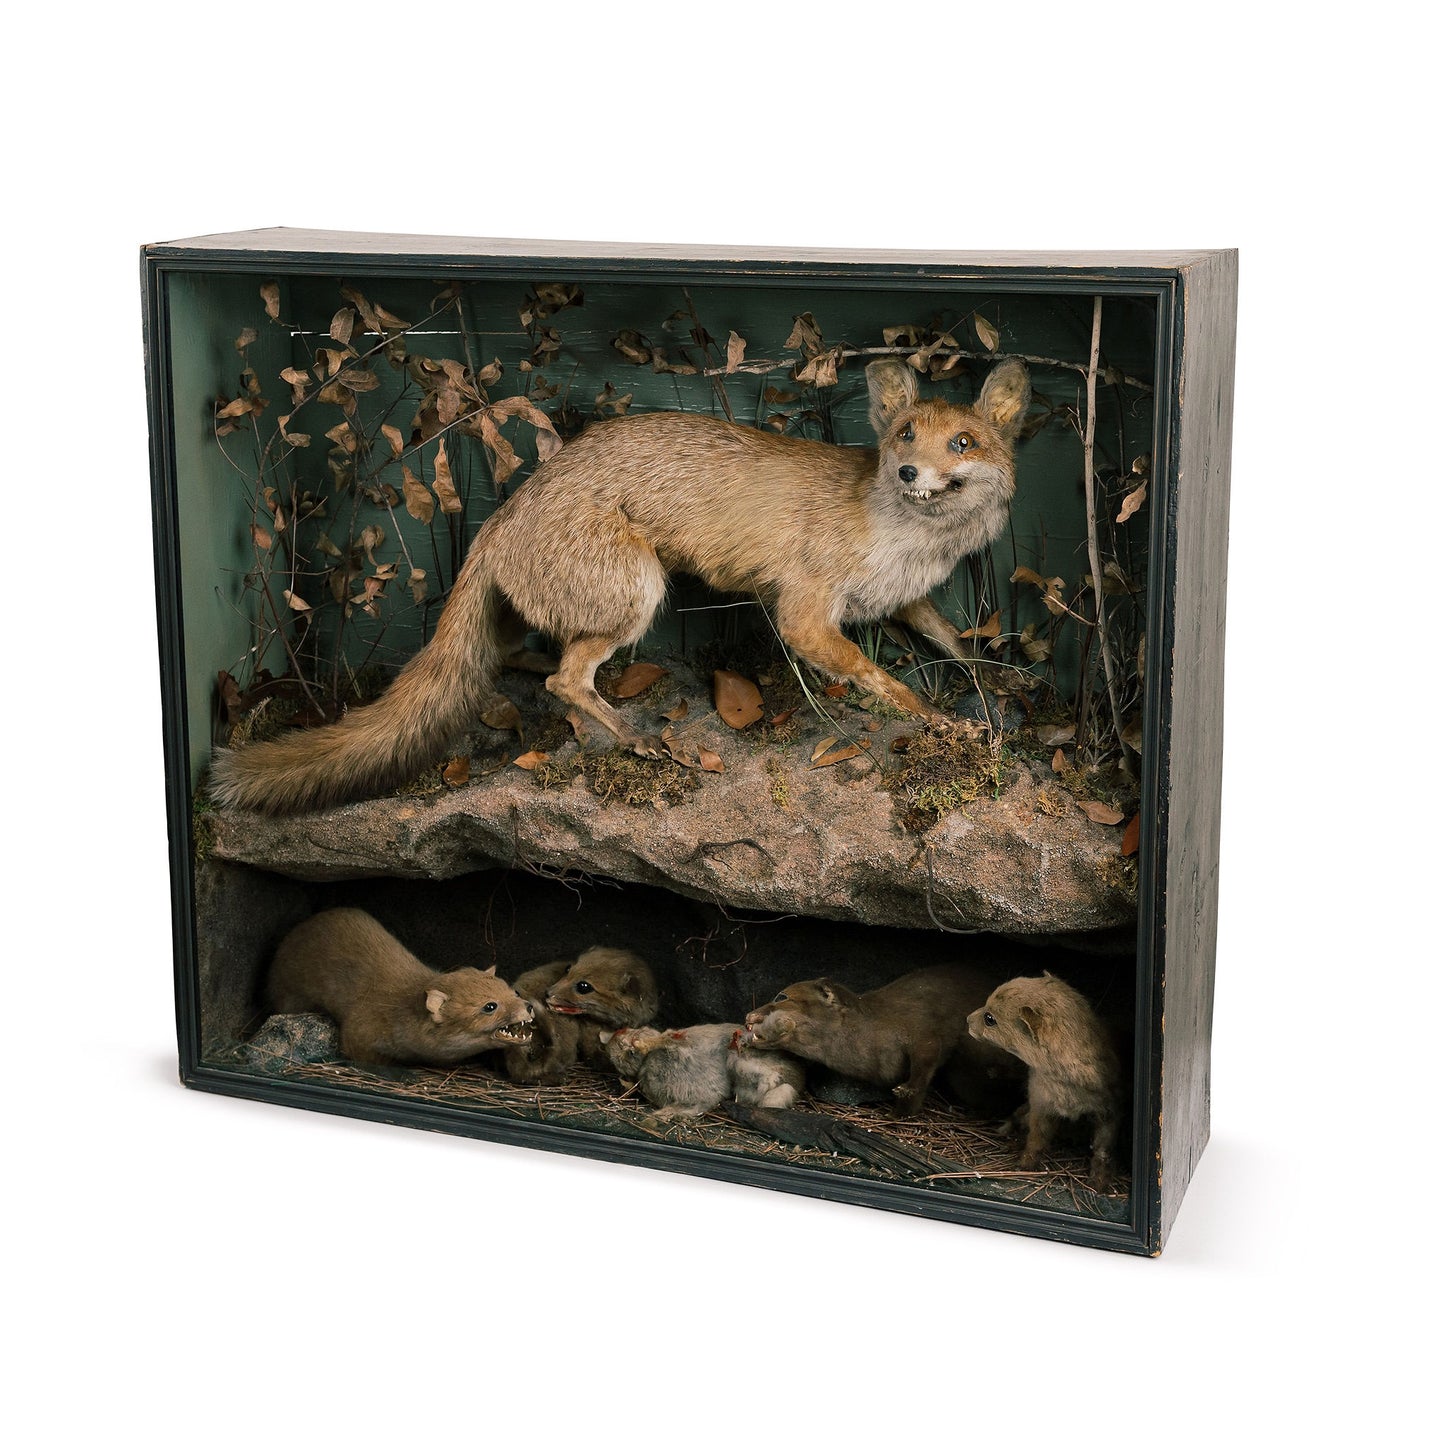 Large Fox Taxidermy Diorama With Babies